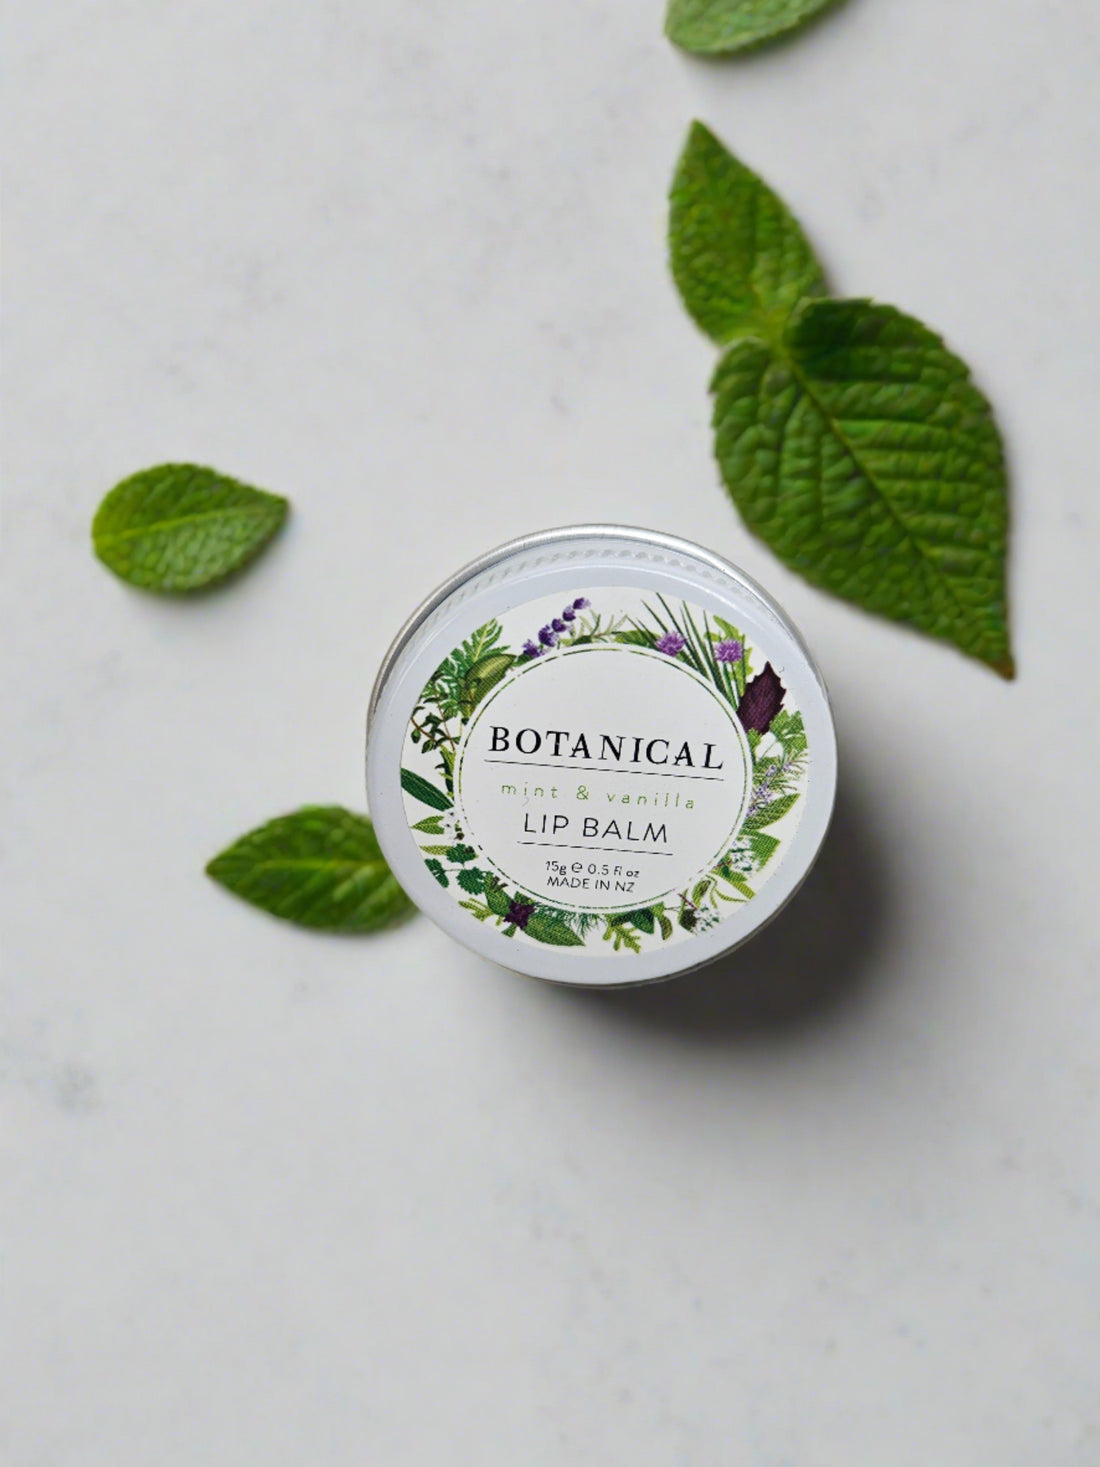 A small tin of the Botanical Mint &amp; Vanilla Lip Balm, with a foliage label.